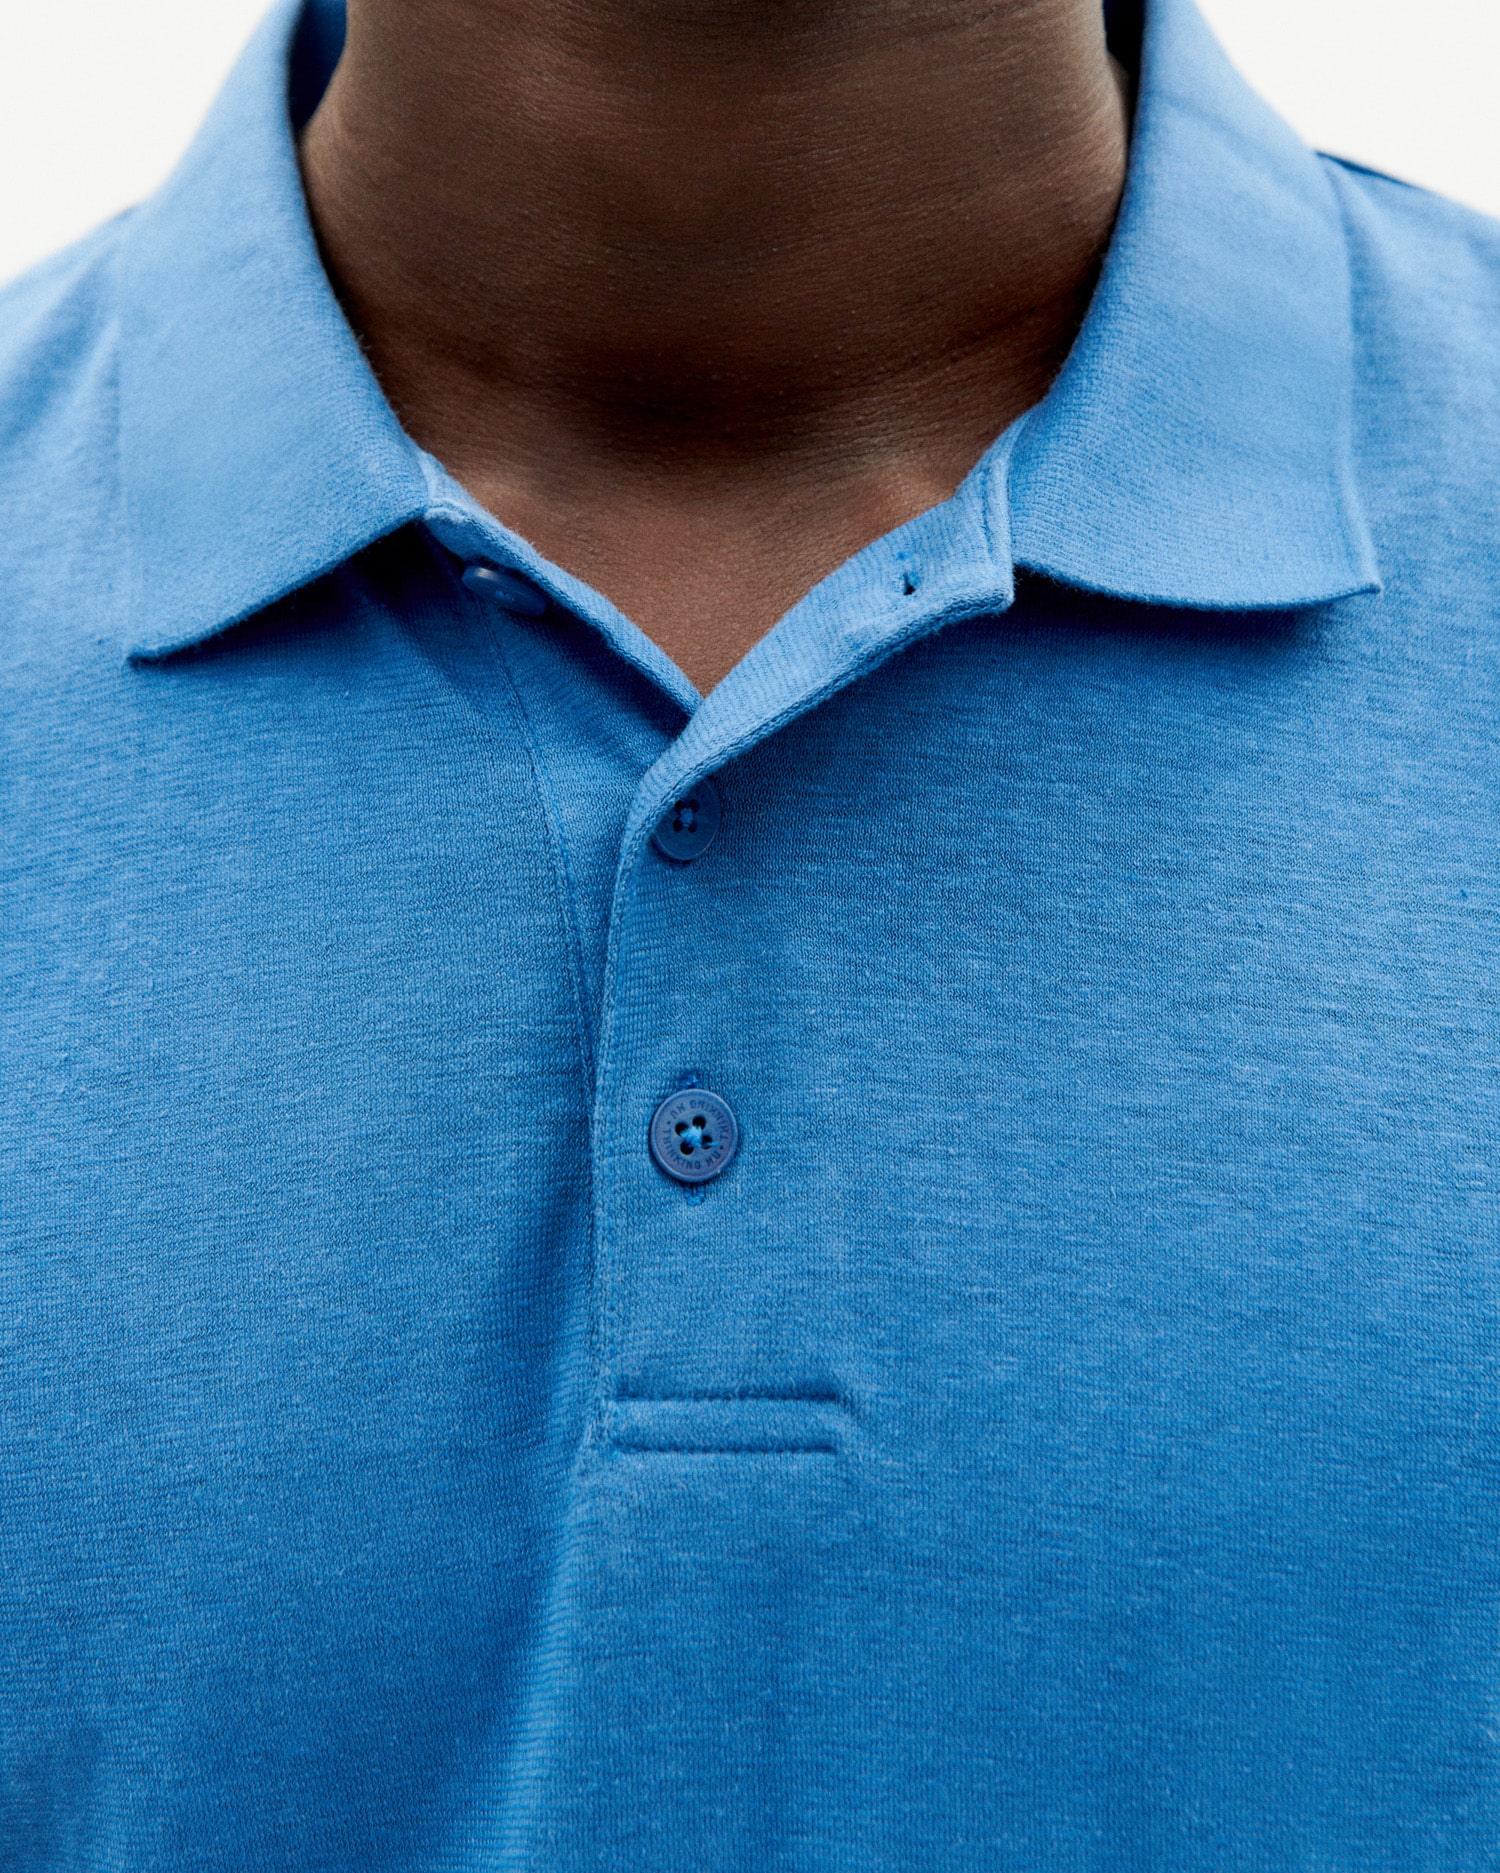 Polo-Shirt HEMP heritage blue